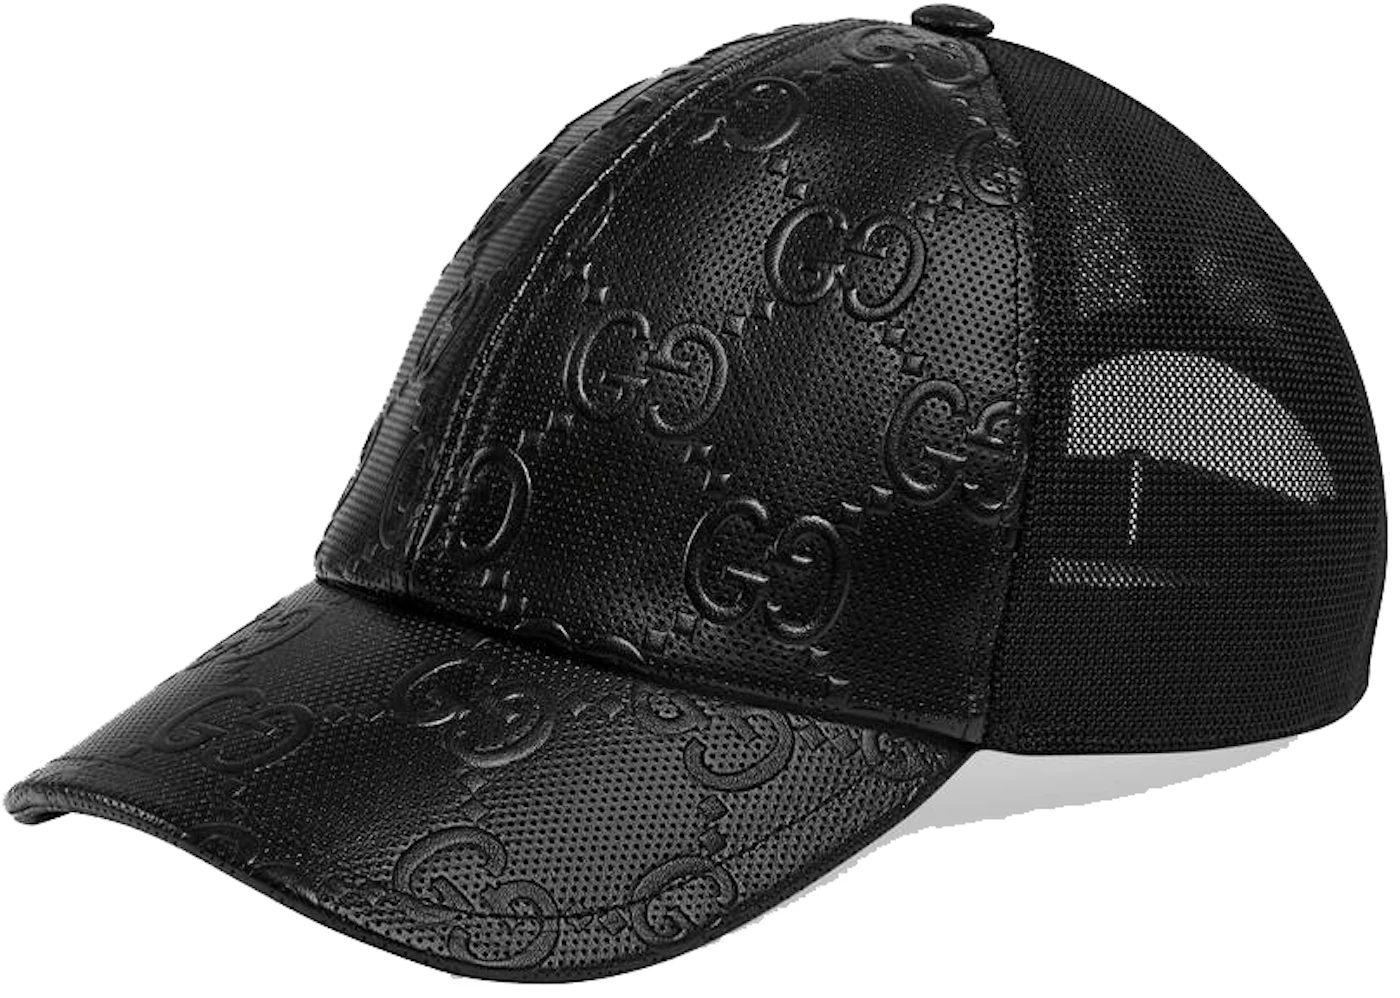 BLACK GUCCI MONOGRAM 500 LIMITED EDITION CAP/HAT NWT